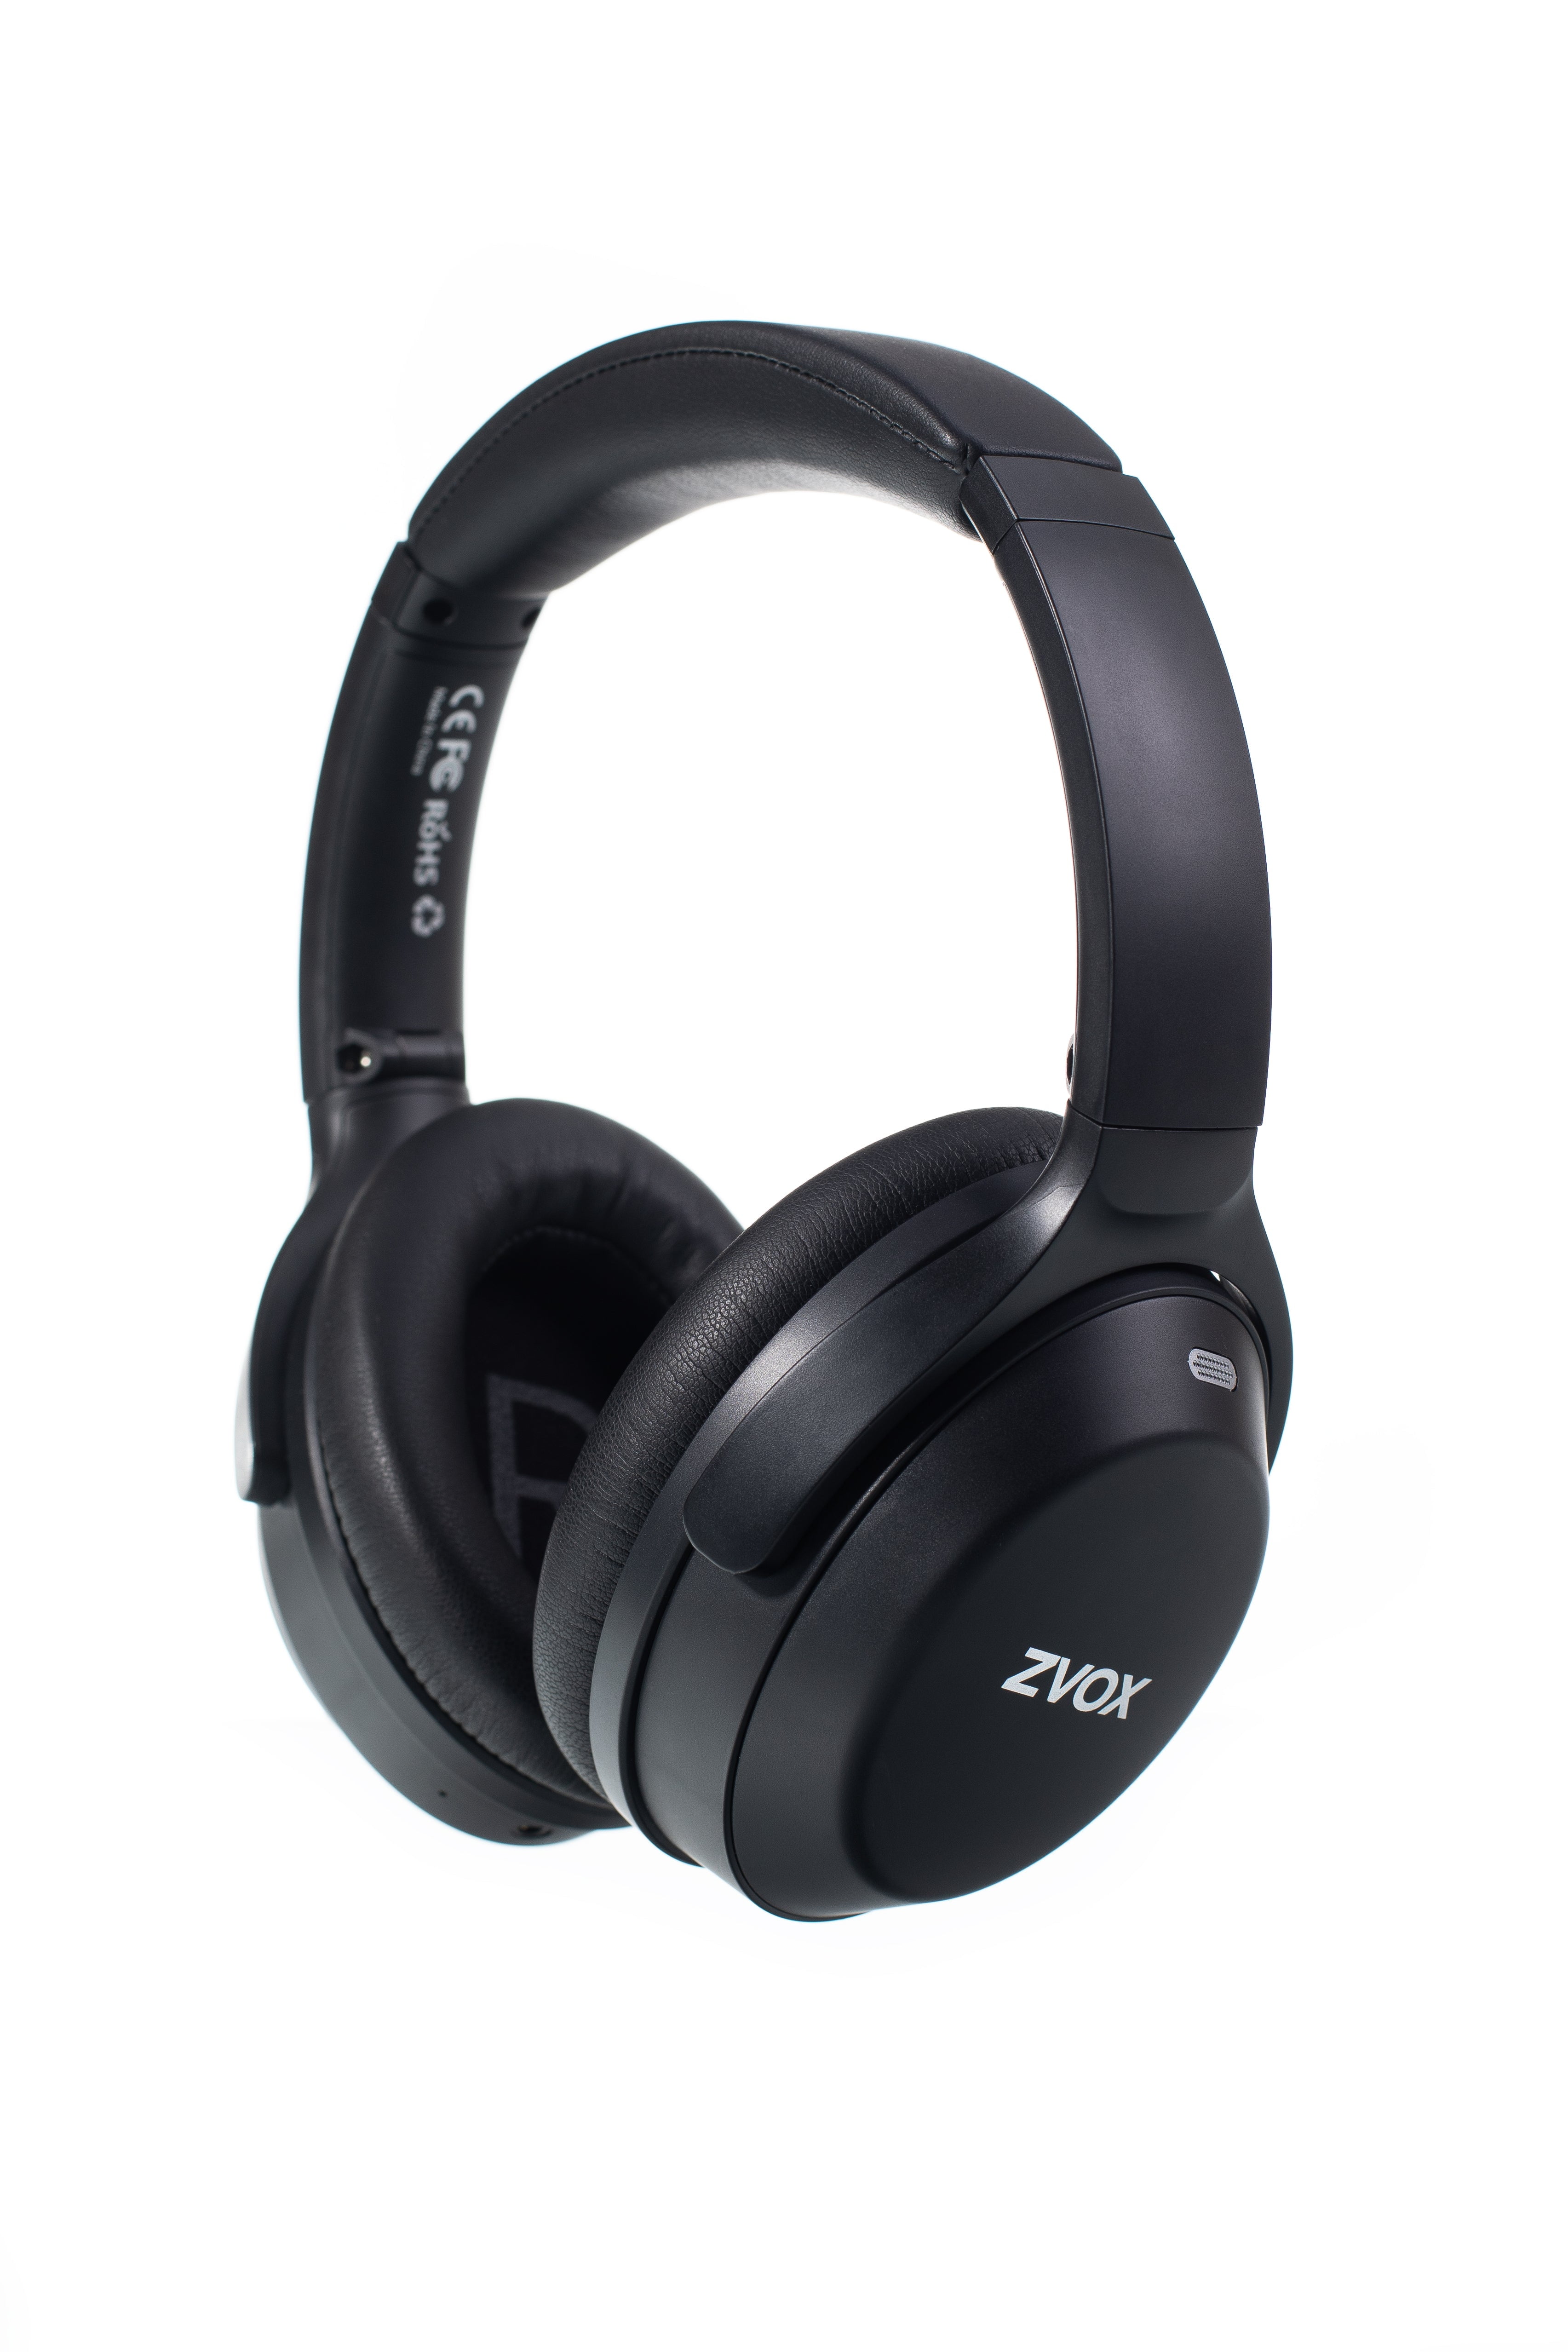 ZVOX AV52 Noise Cancelling Headphones With AccuVoice Technology Black 